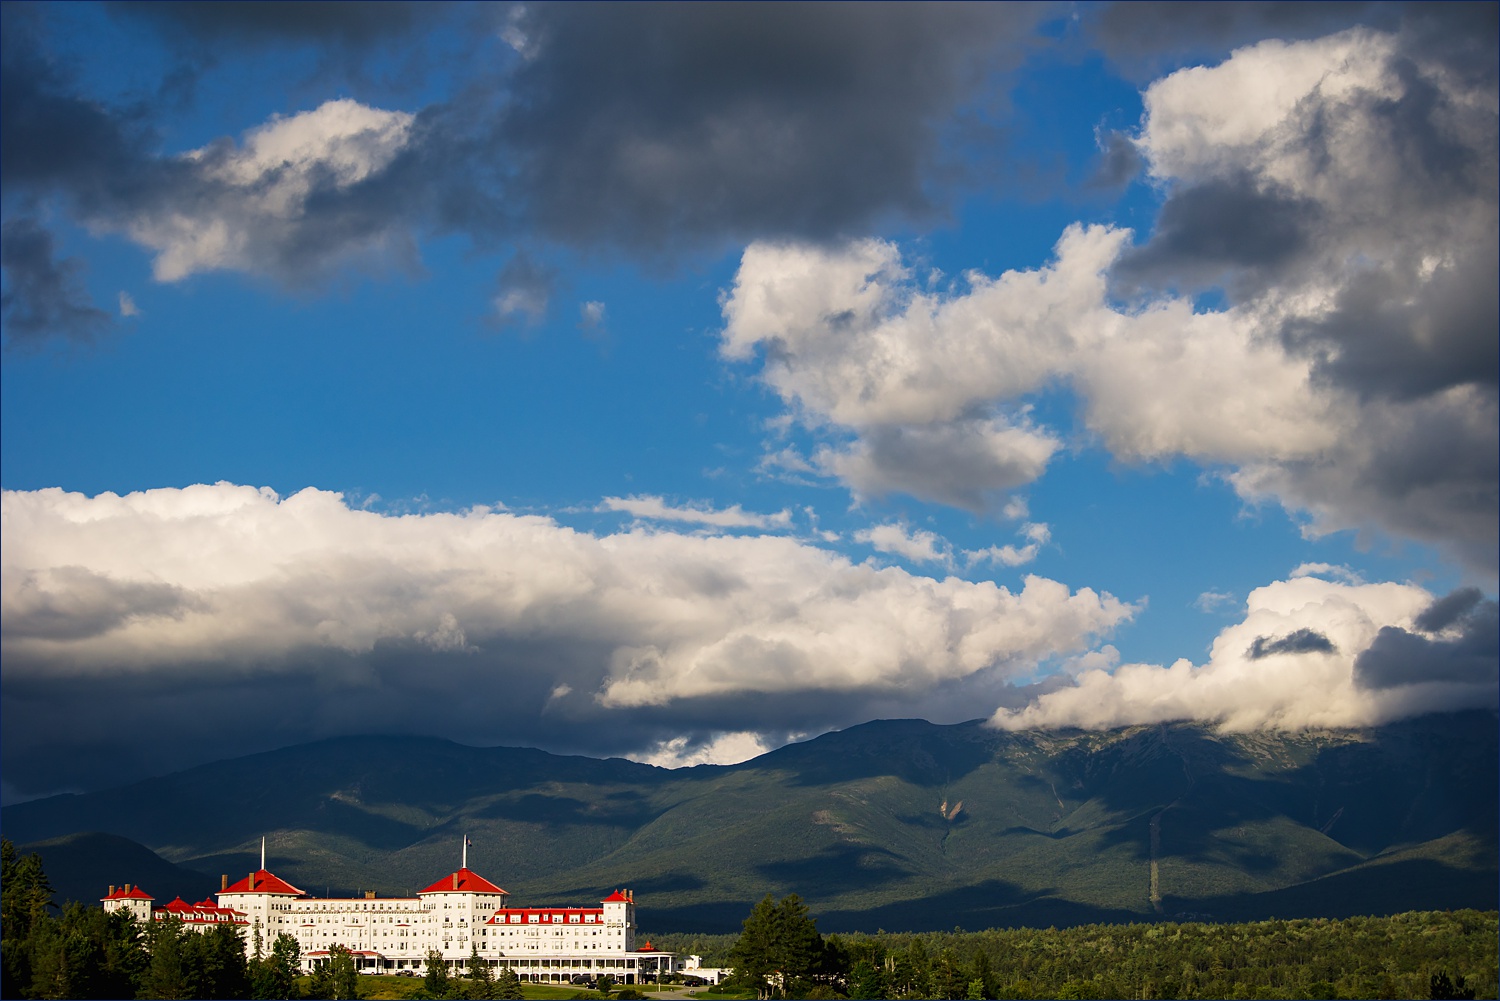 Omni Mount Washington Resort hotel in Bretton Woods New Hampshire on the wedding day